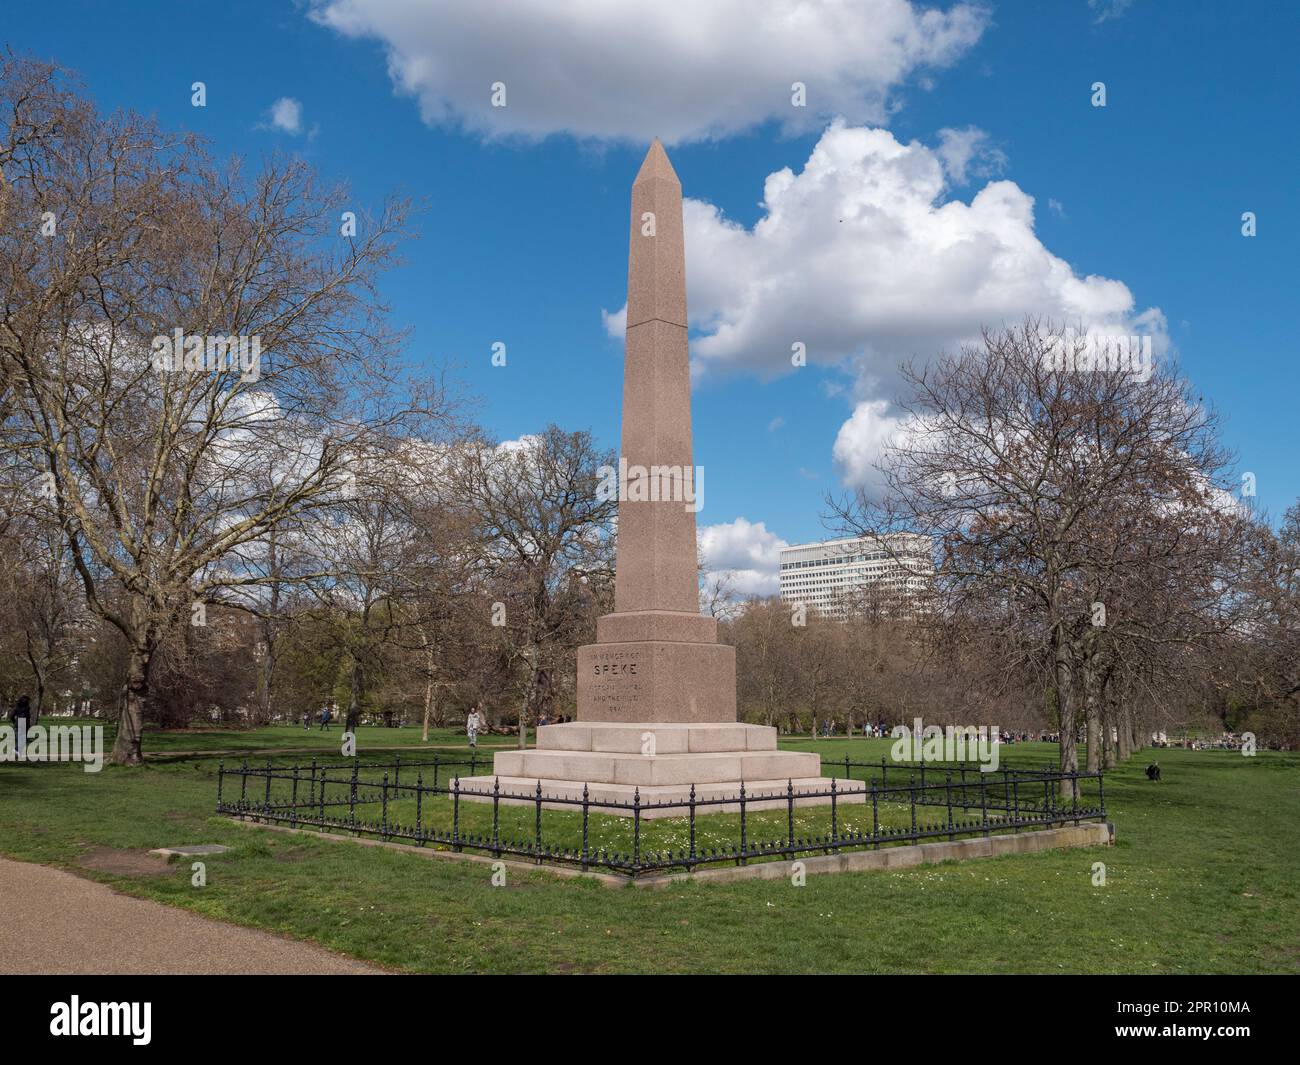 The Speke Monument, dedicated to John Hanning Speke and designed by Philip Hardwick, Kensington Gardens, London, UK. Stock Photo